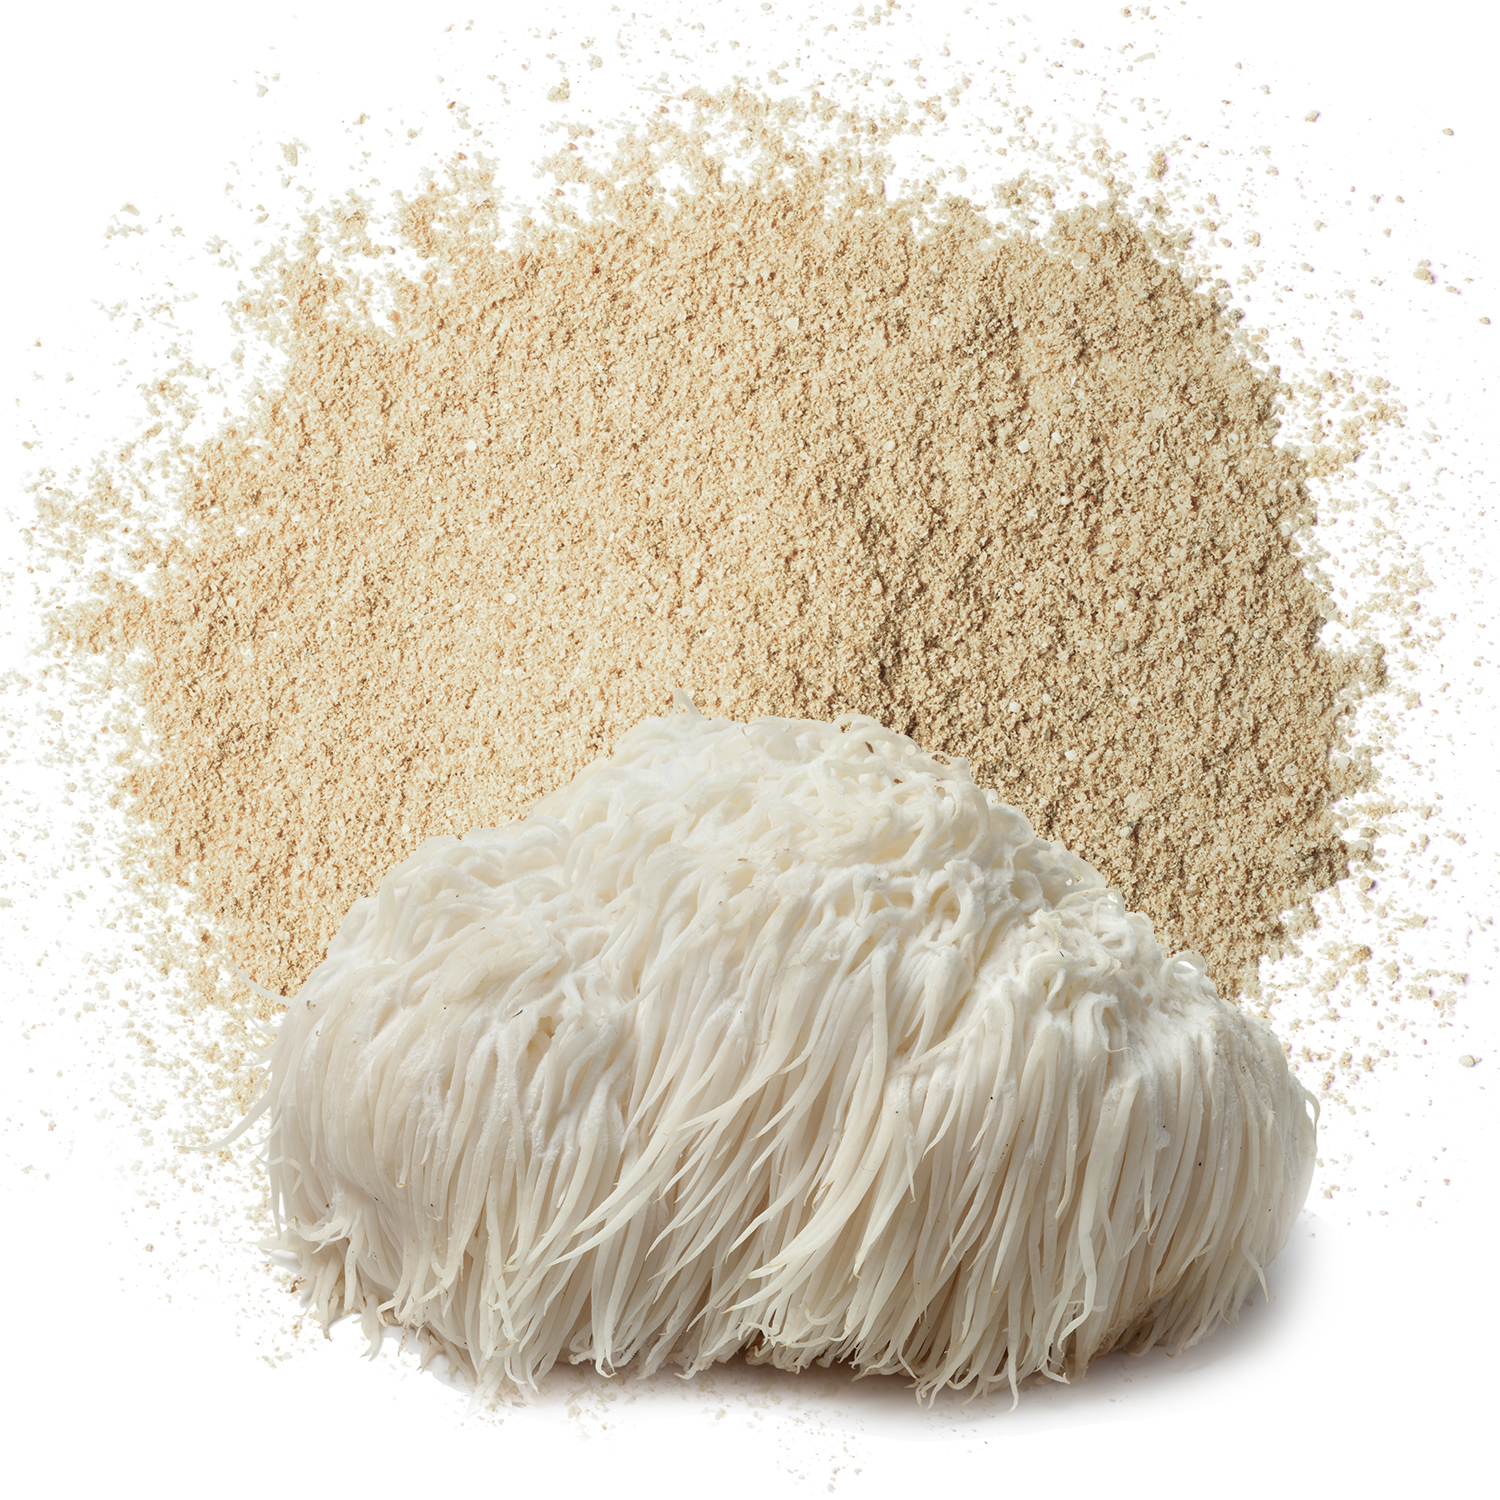 Wholesale Lion's Mane Mushroom Extract Powder